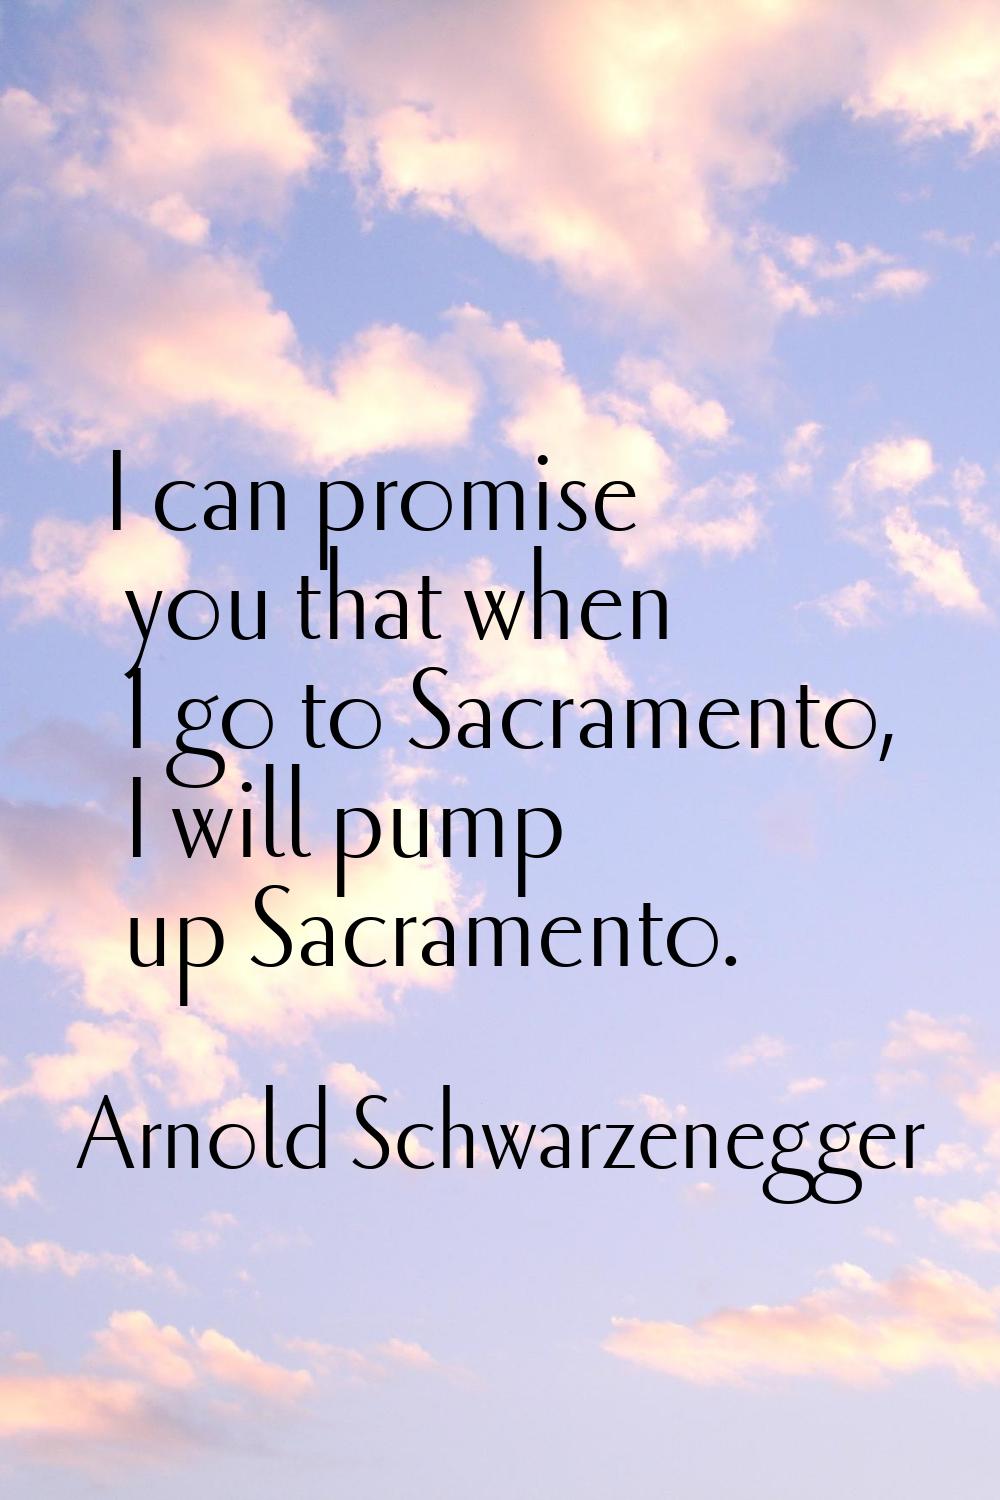 I can promise you that when I go to Sacramento, I will pump up Sacramento.